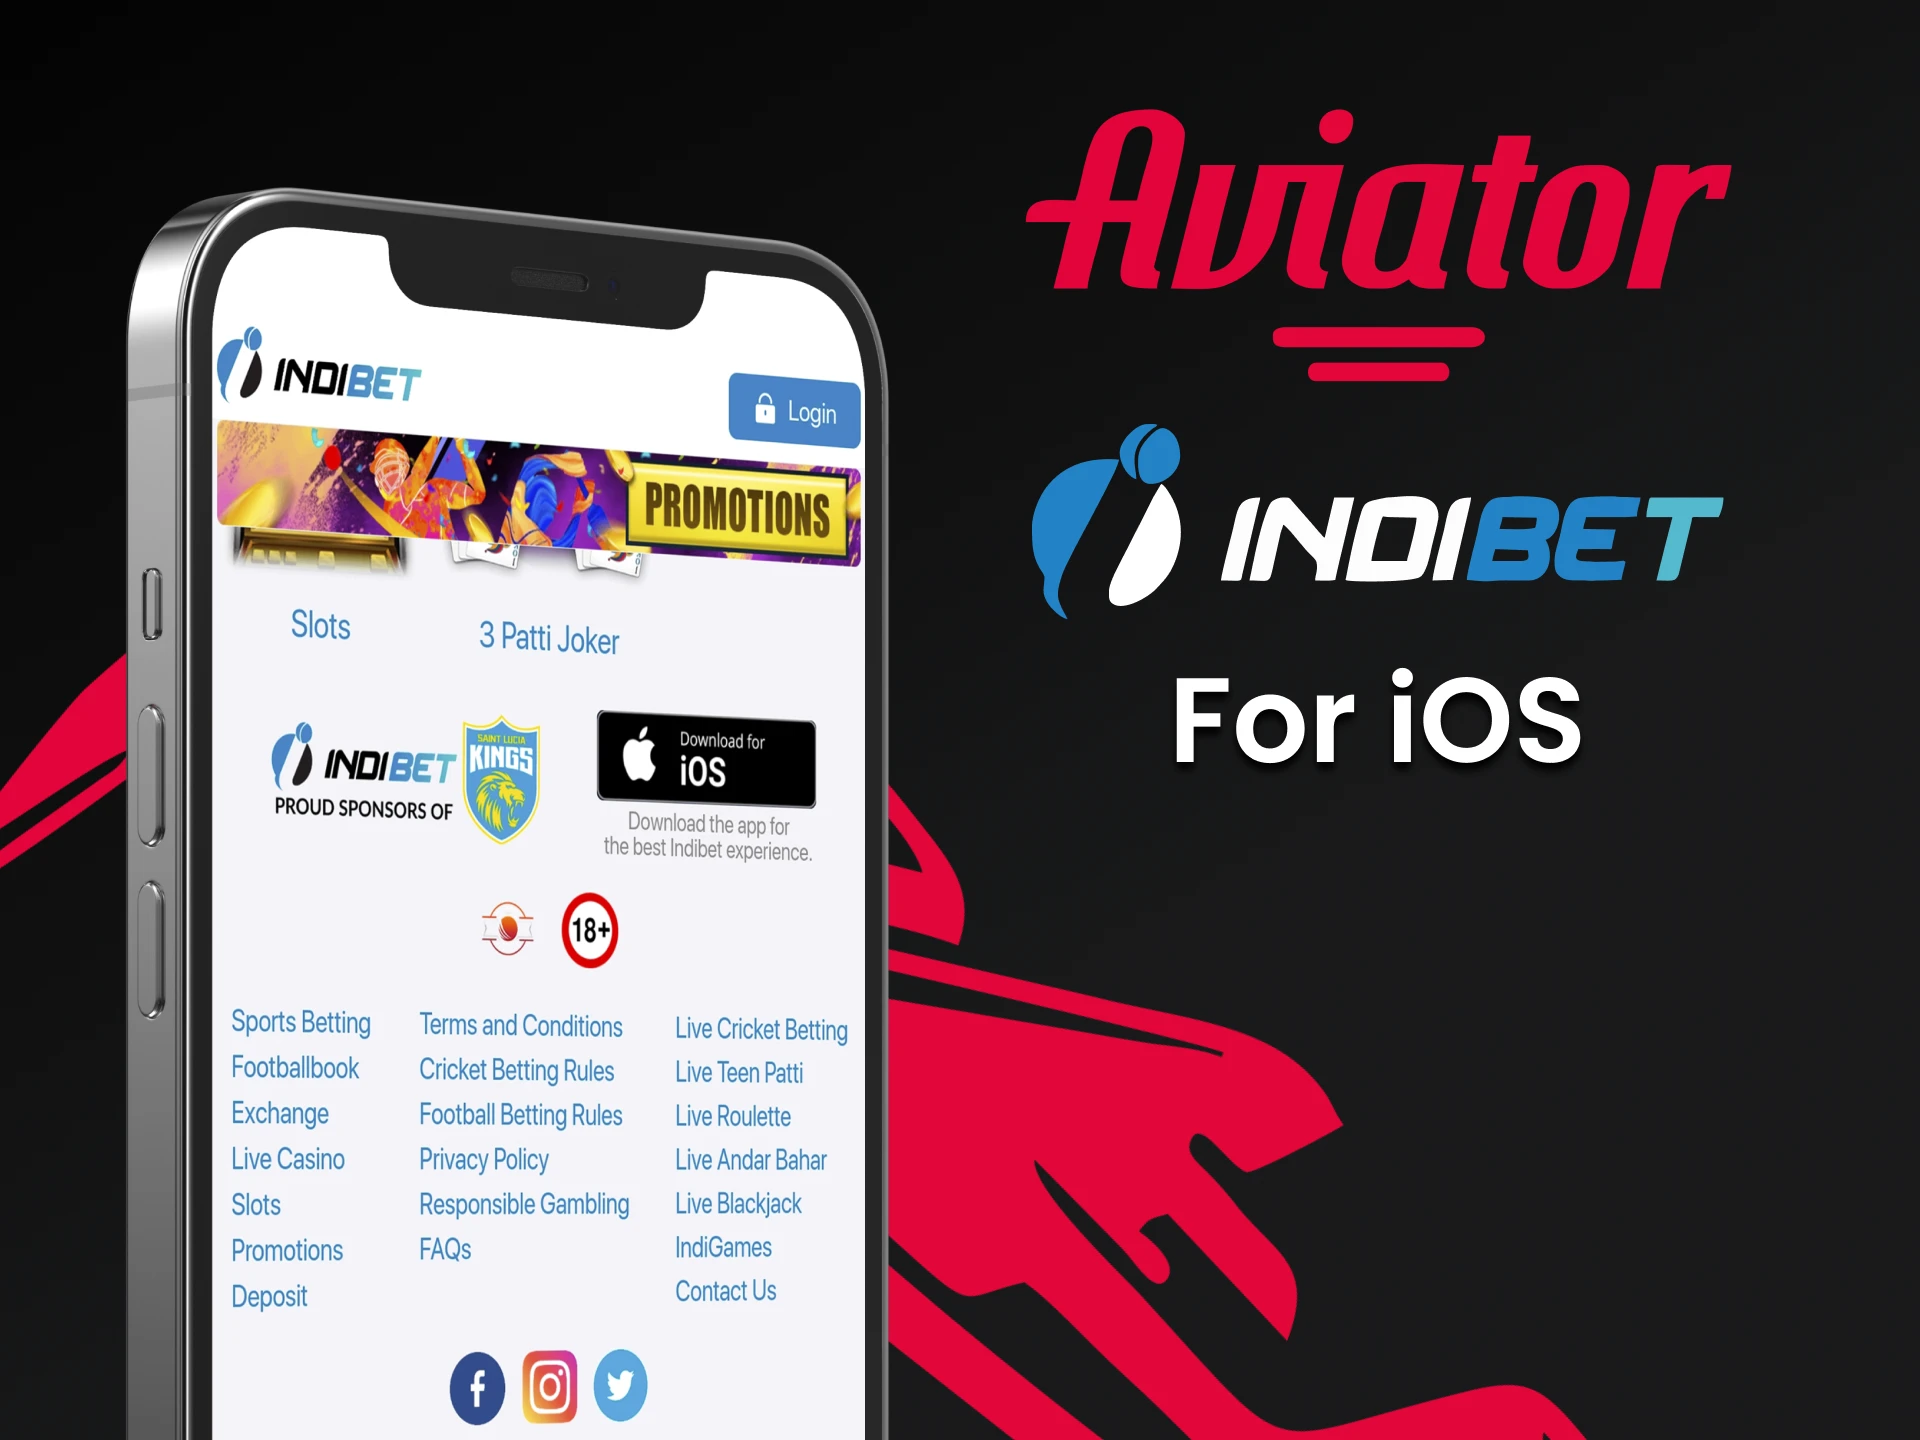 Download the Indibet iOS app to play Aviator.